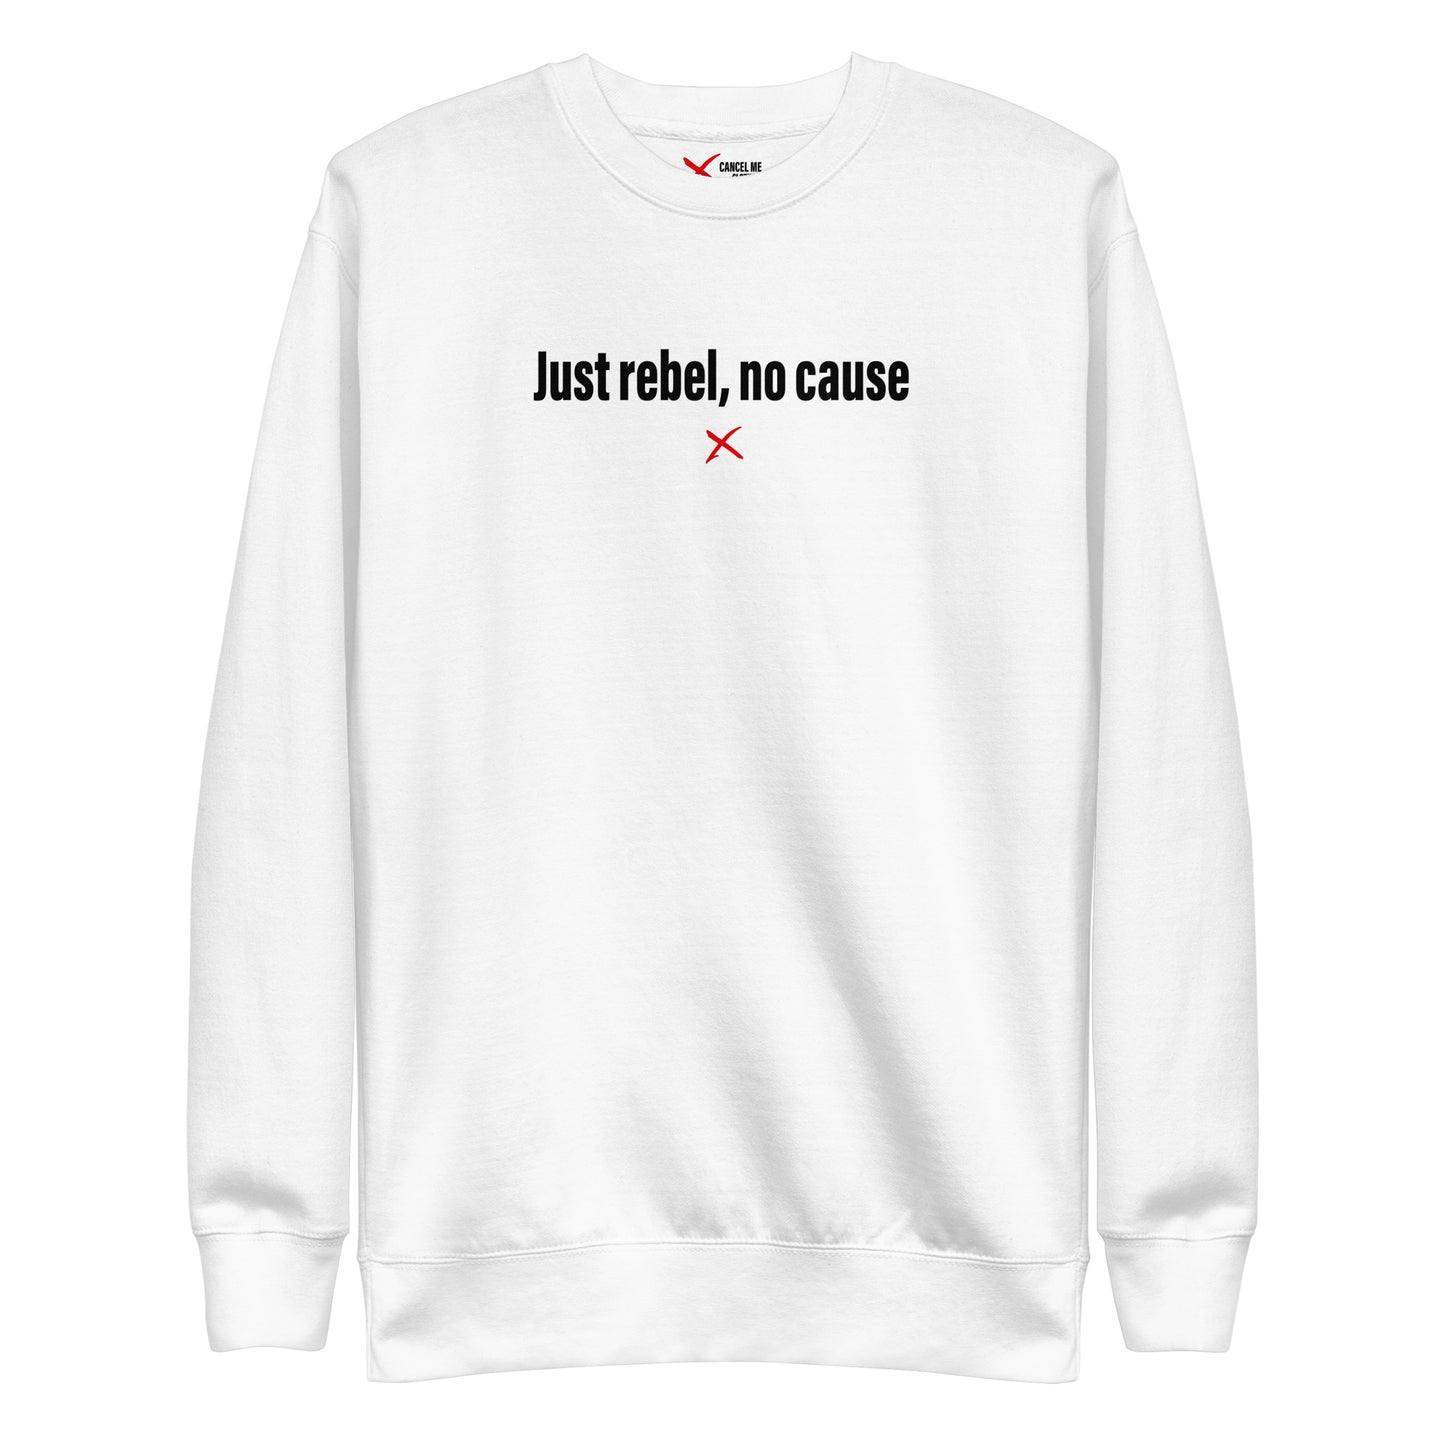 Just rebel, no cause - Sweatshirt